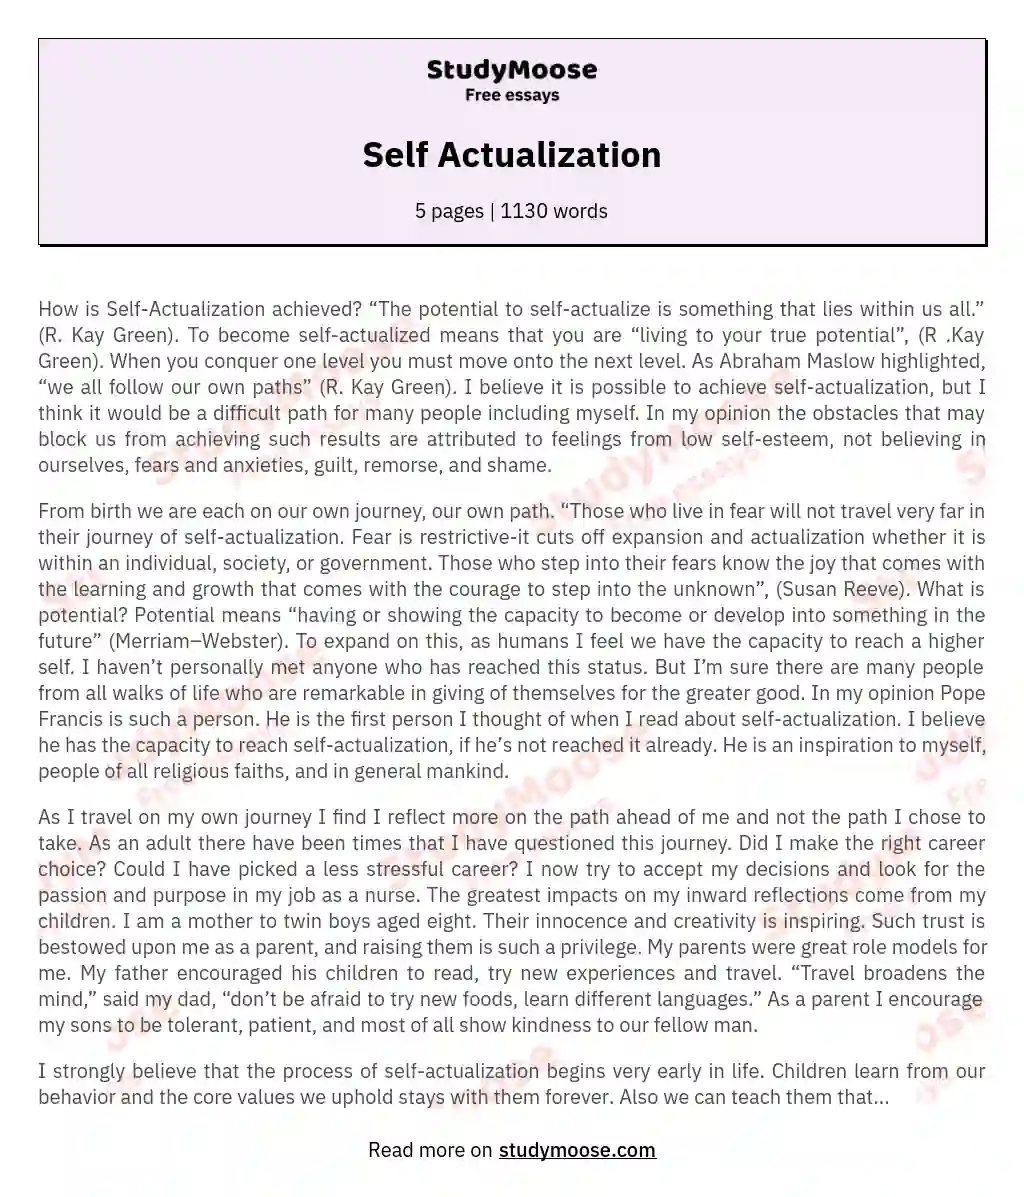 Self Actualization essay